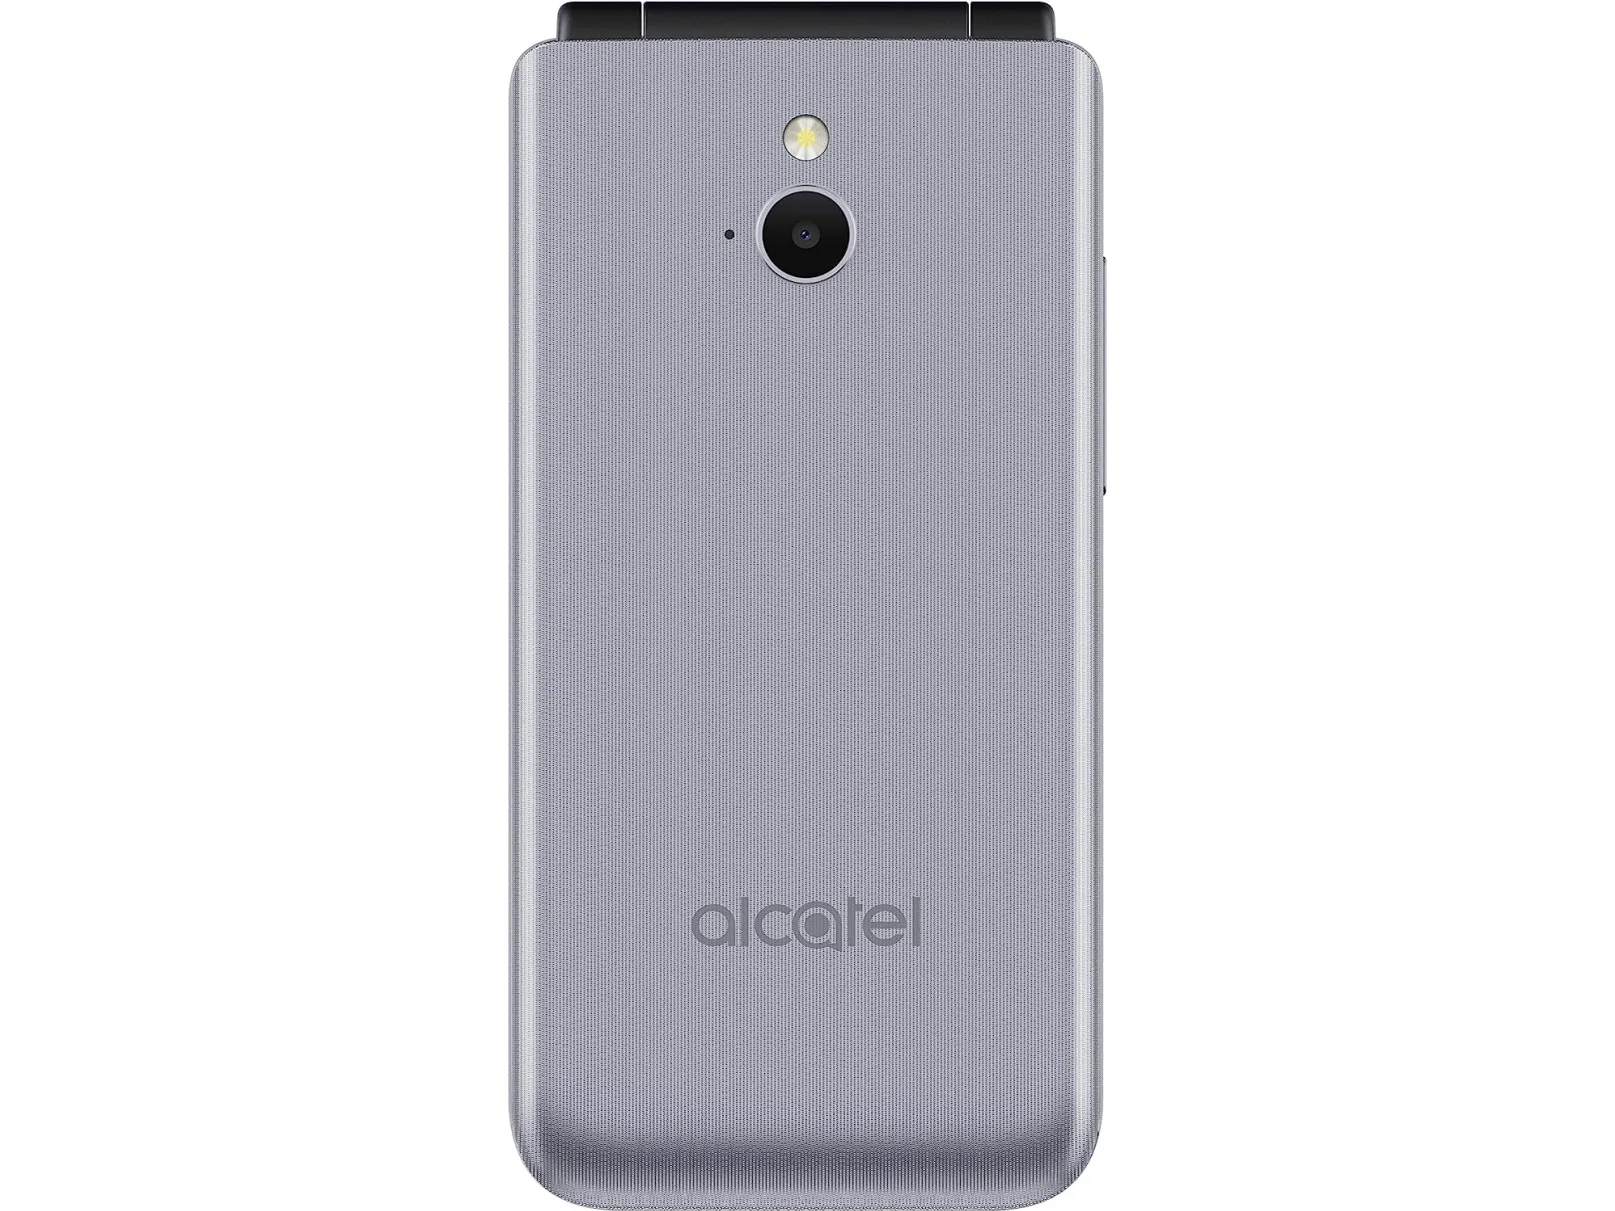 Alcatel 3082 4G, Grau, 1,3 Silber 1380 Bluetooth, Klapphandy, MP, cm (2.4 mAh, Zoll), 6,1